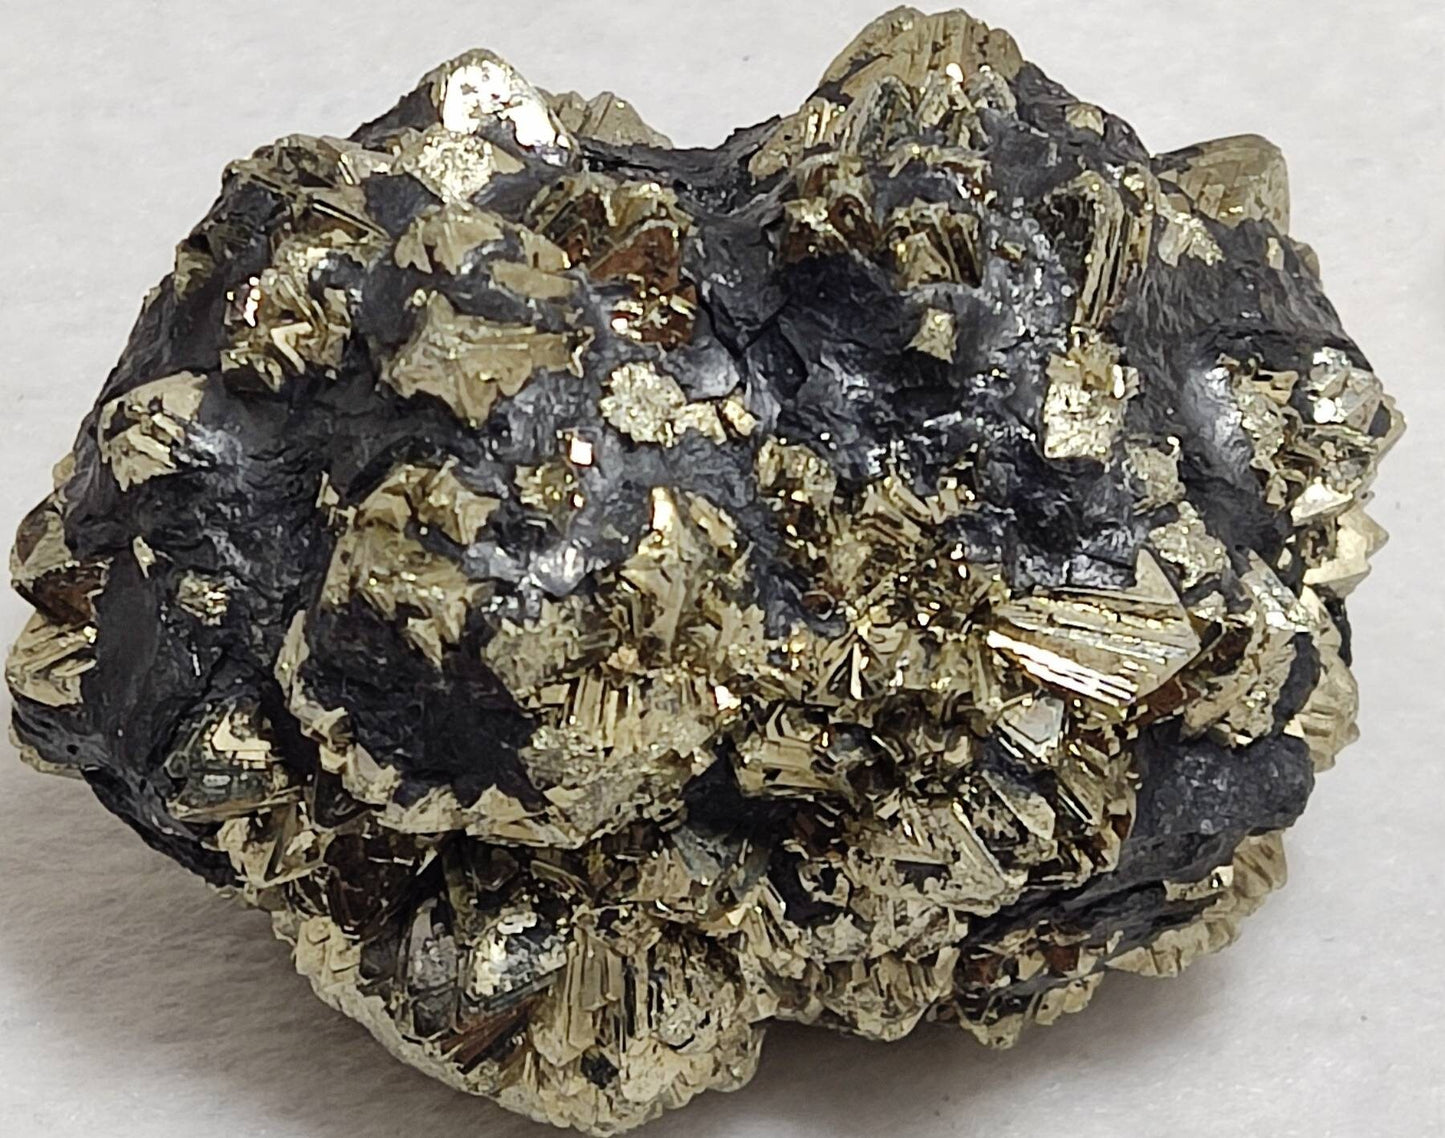 An amazing specimen of pyrite/marcasite 231 grams